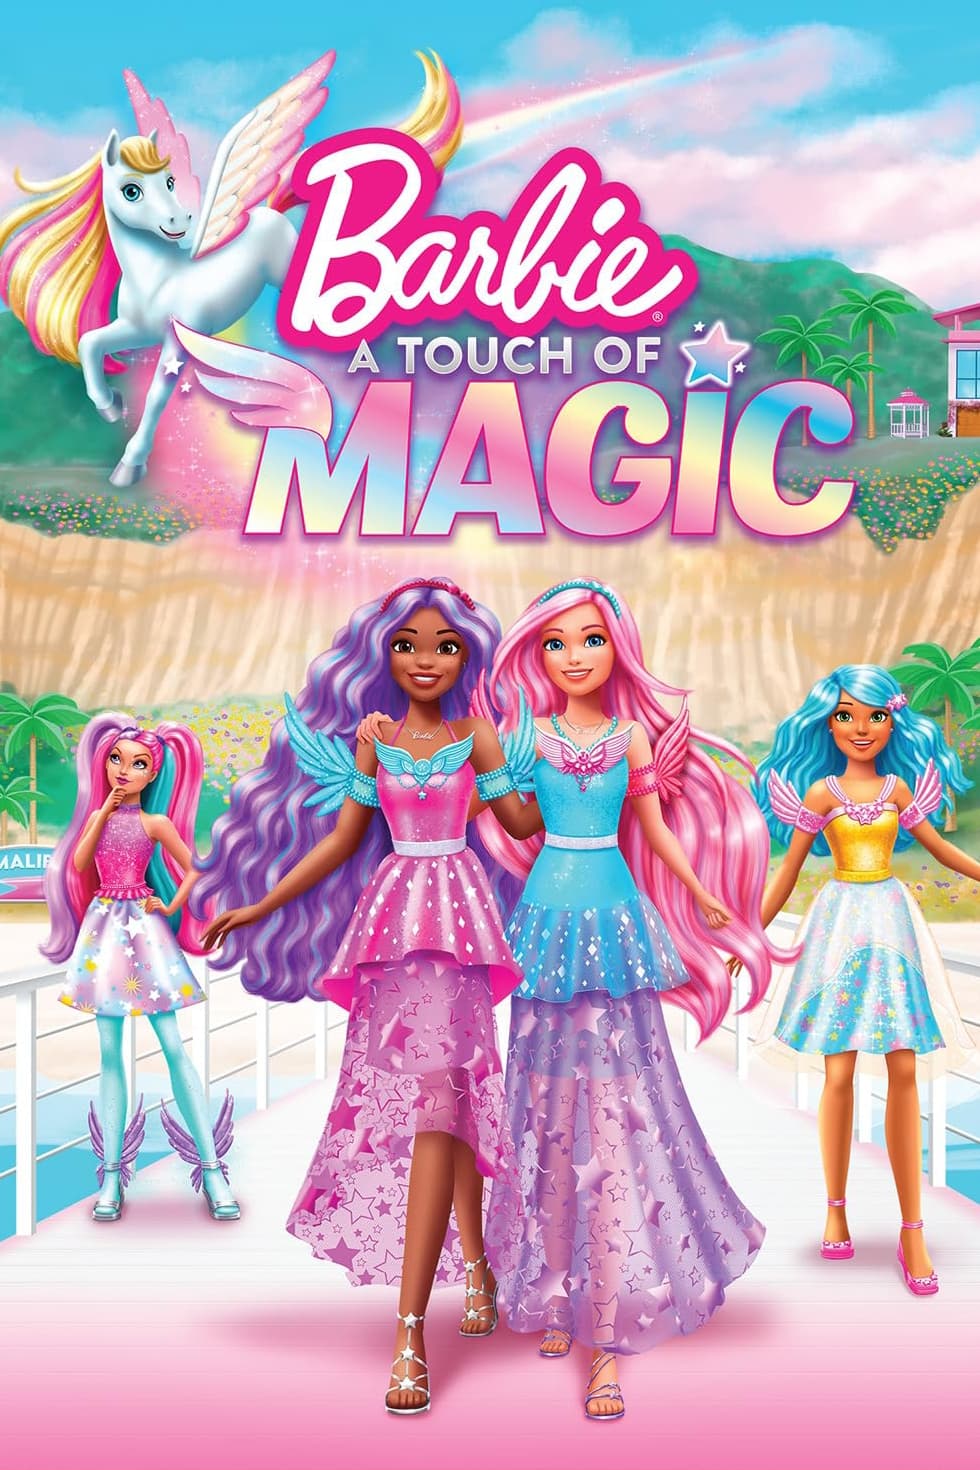 Caratula de Barbie: A Touch of Magic (Barbie un toque de magia) 